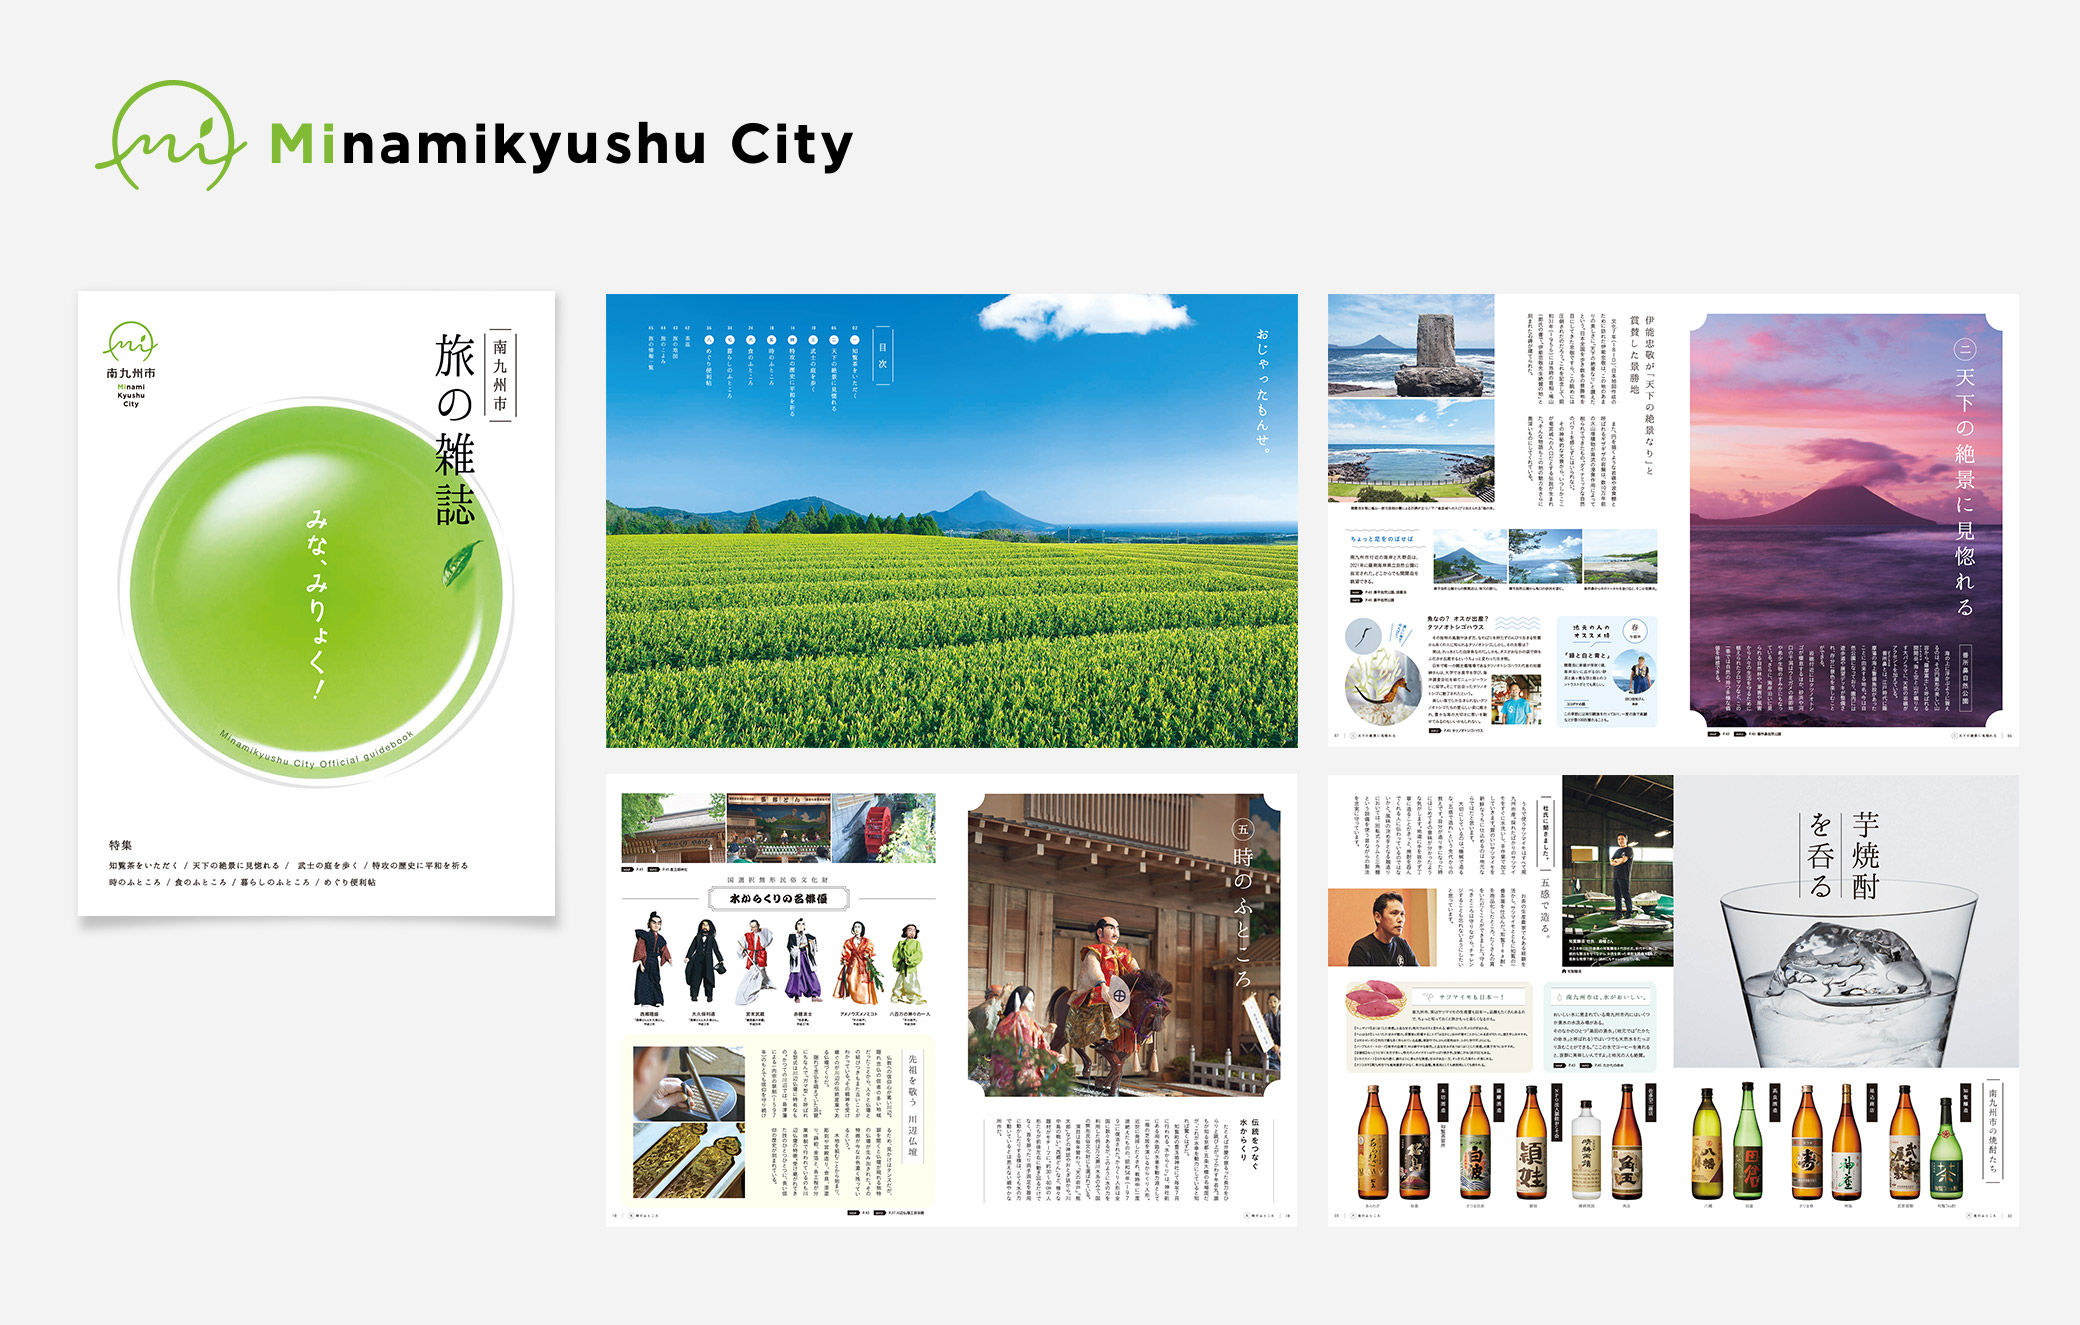 Branding for the city of Minami-Kyushu, Kagoshima, Japan